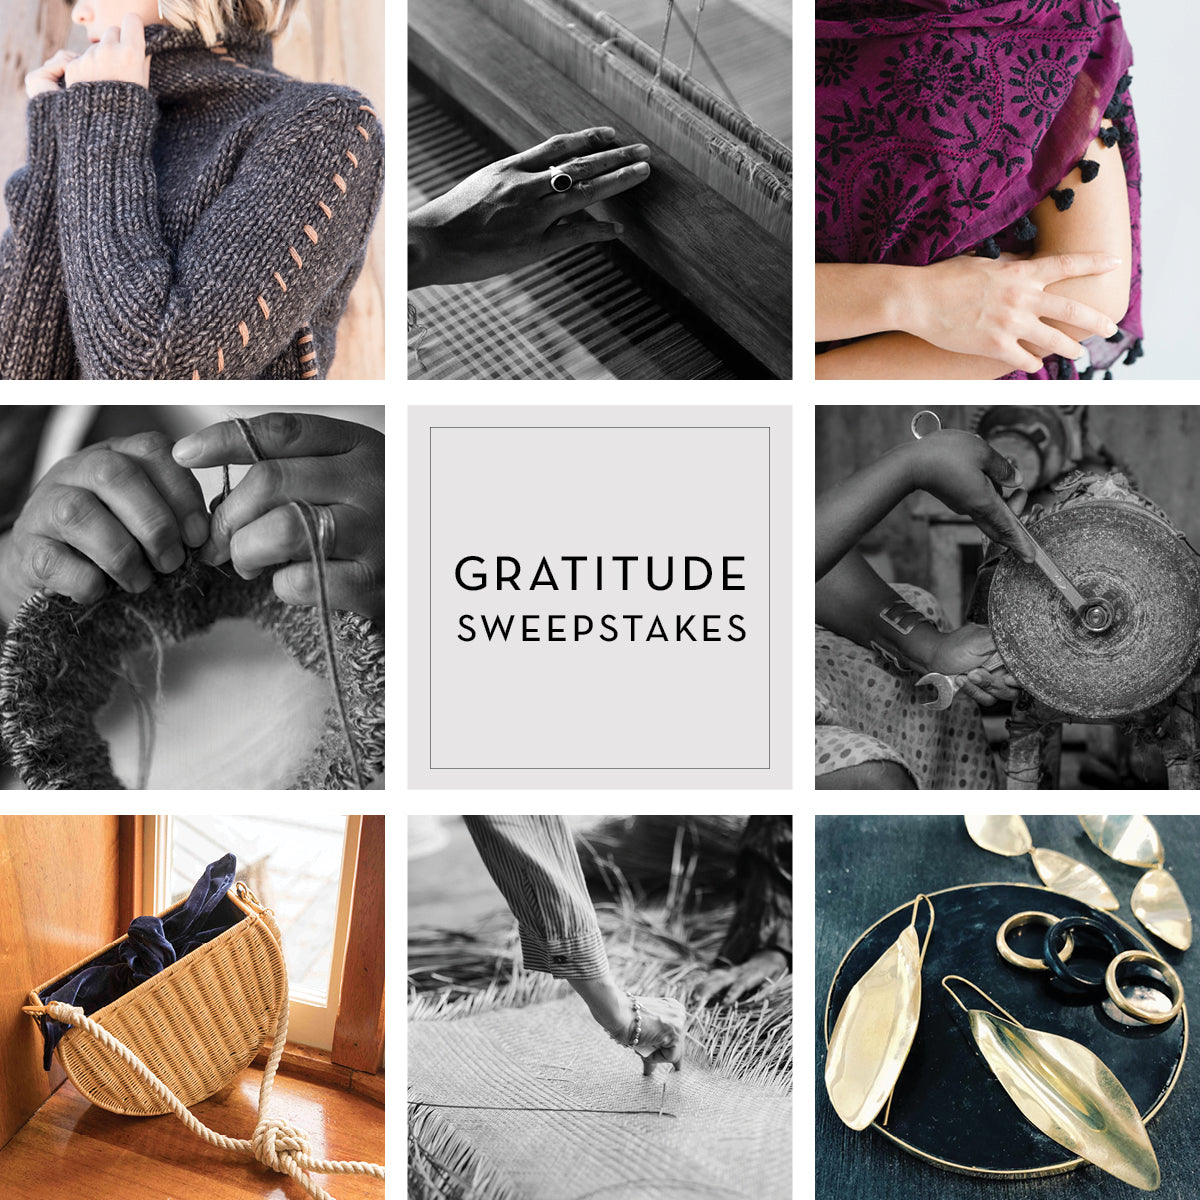 Gratitude Sweepstakes | Enter to Win $1,500 of Ethical Fashion